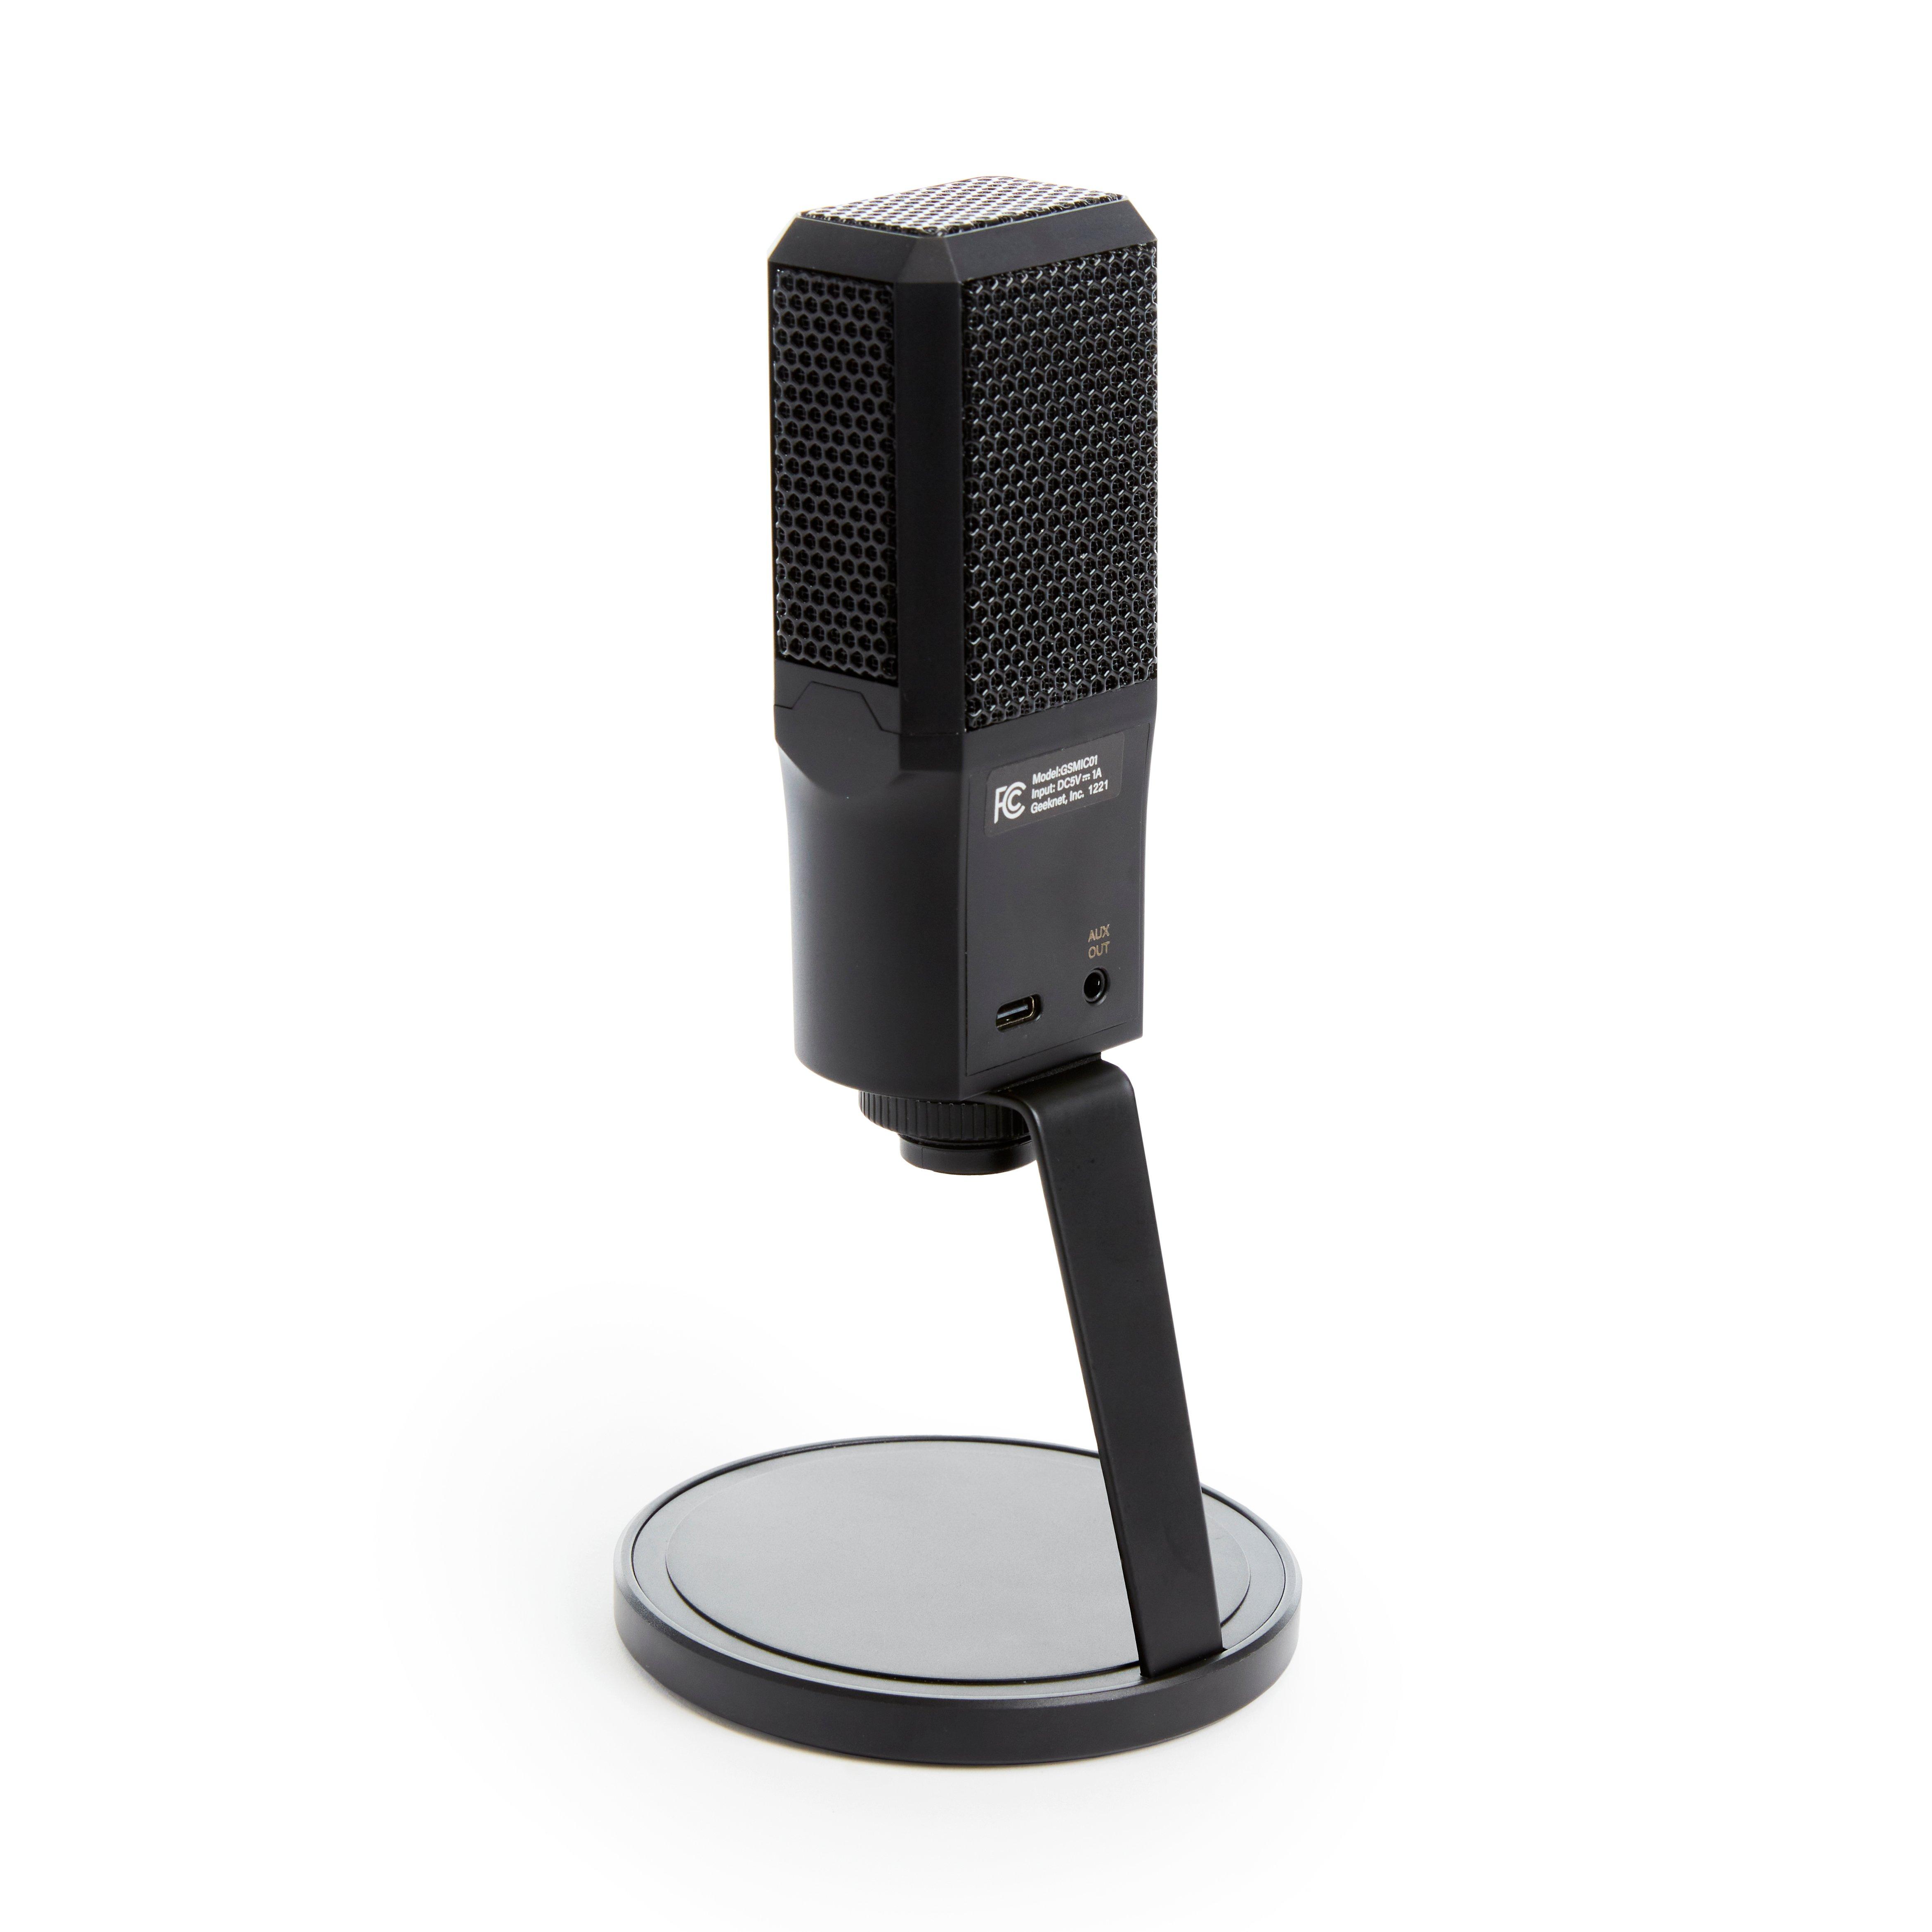 list item 2 of 6 Atrix Desktop USB Streaming Microphone for PC